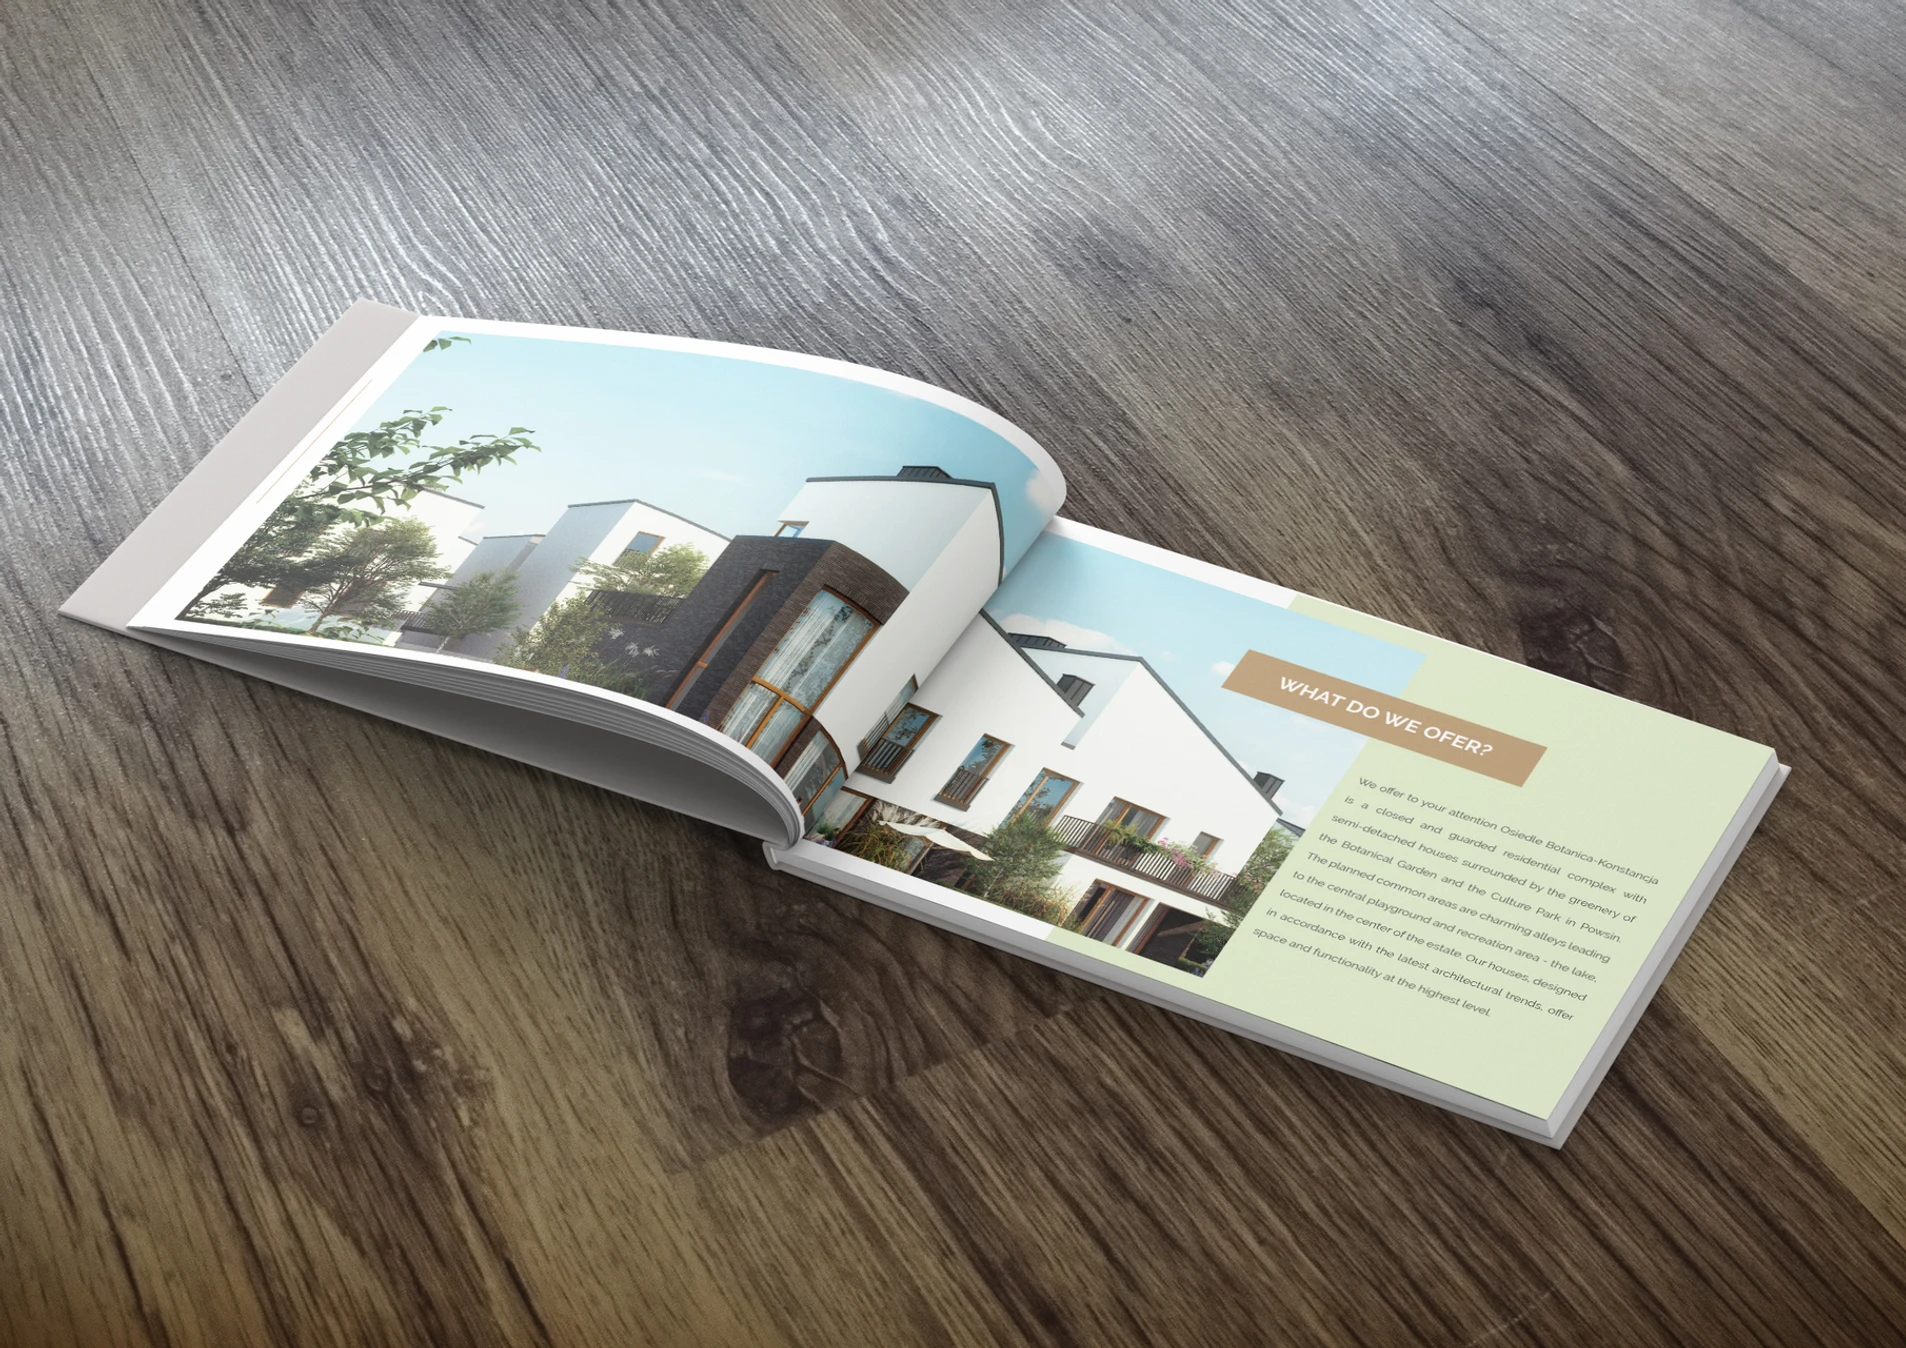 Sales book for Botanica Konstanja's eco-friendly cottage village, featuring premium design and informative content.